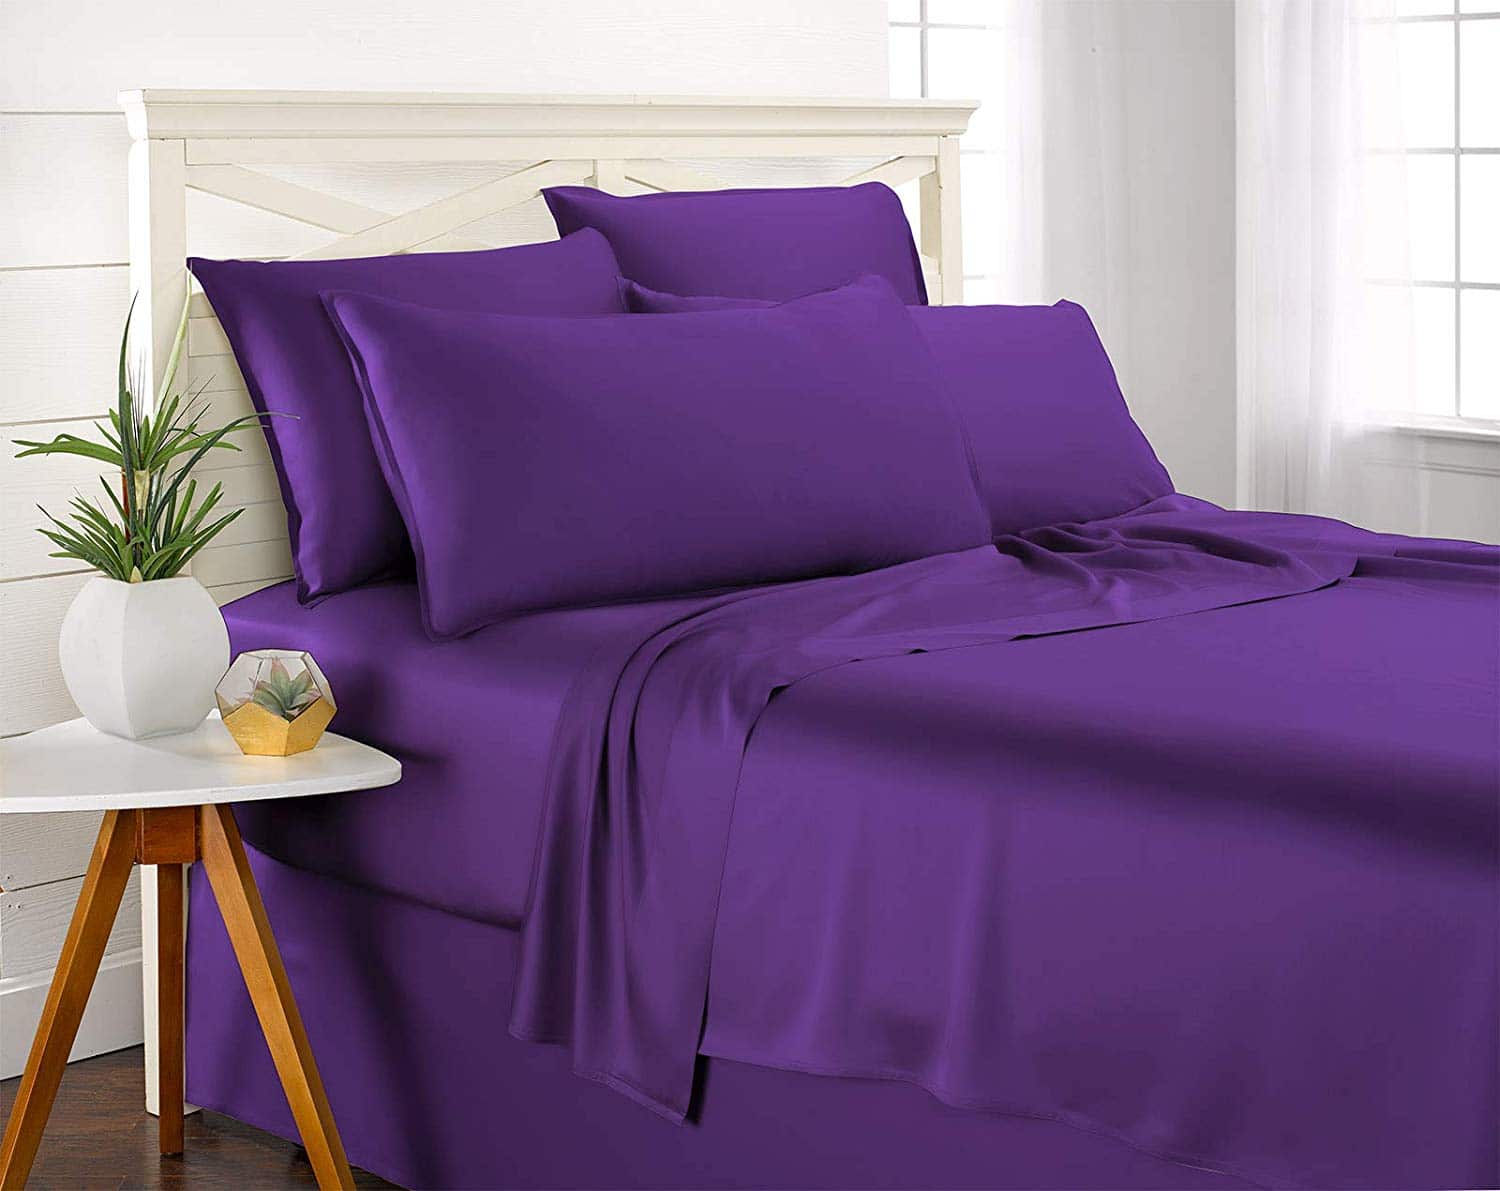 bamboo sheets for purple mattress